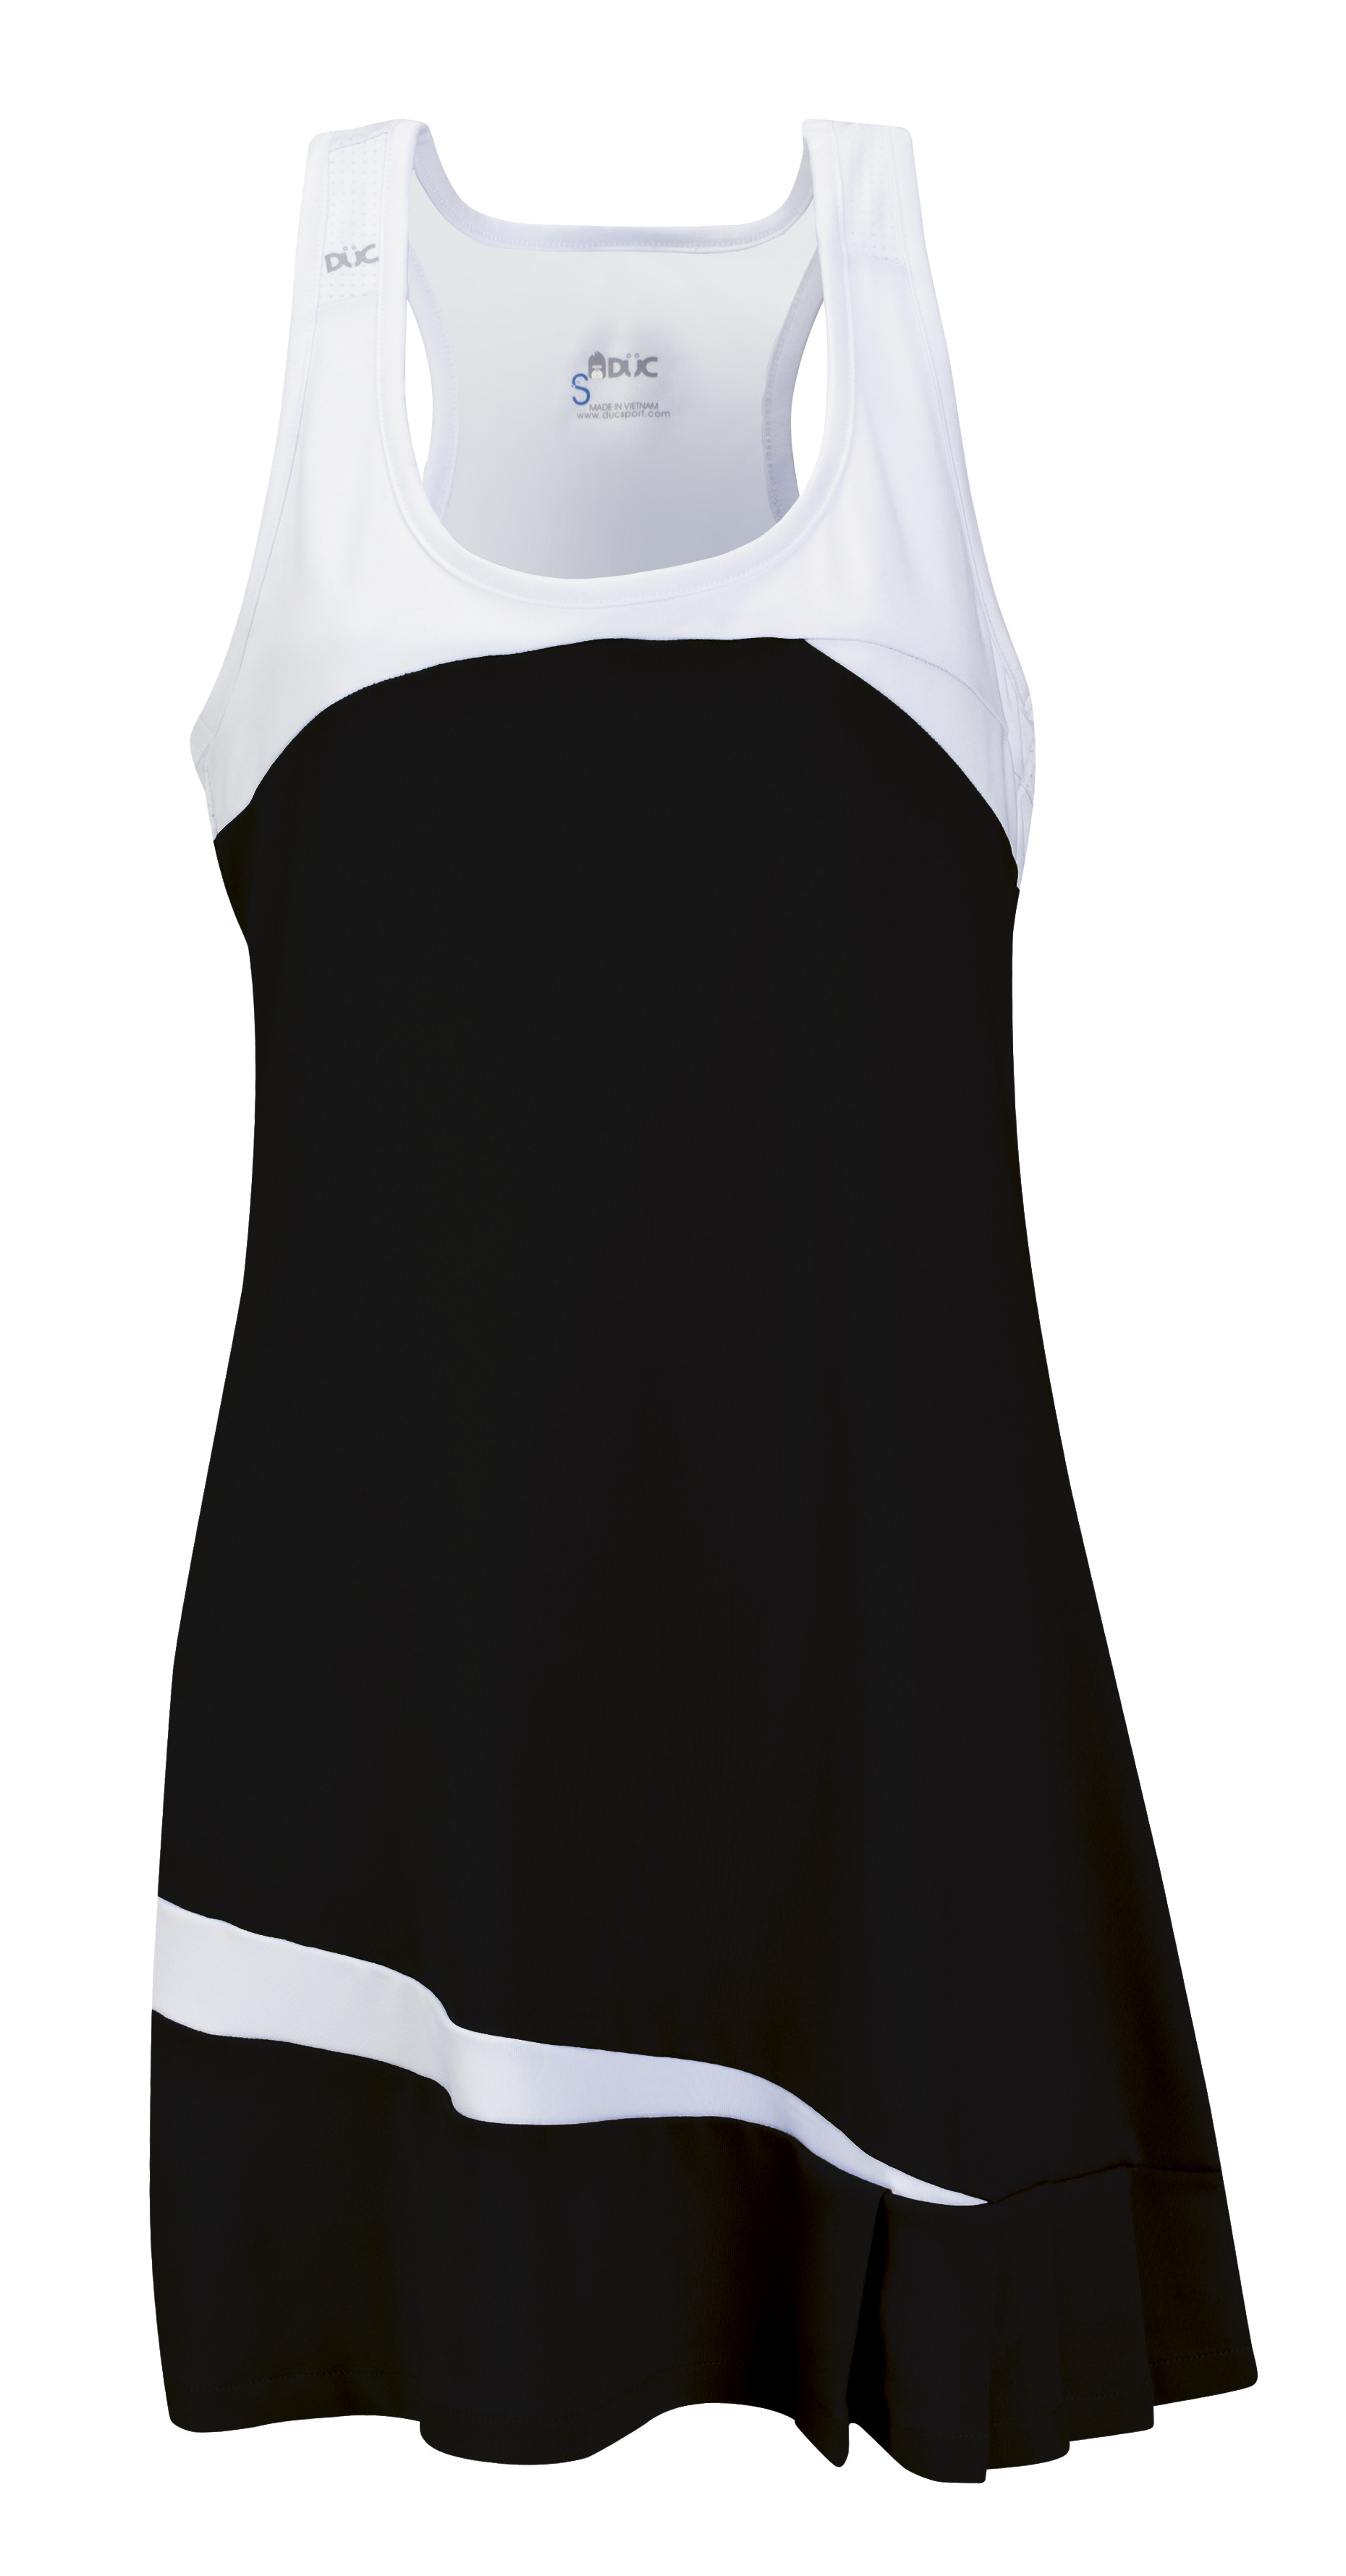 Download DUC Fire Women's Tennis Dress (Black) - Do It Tennis